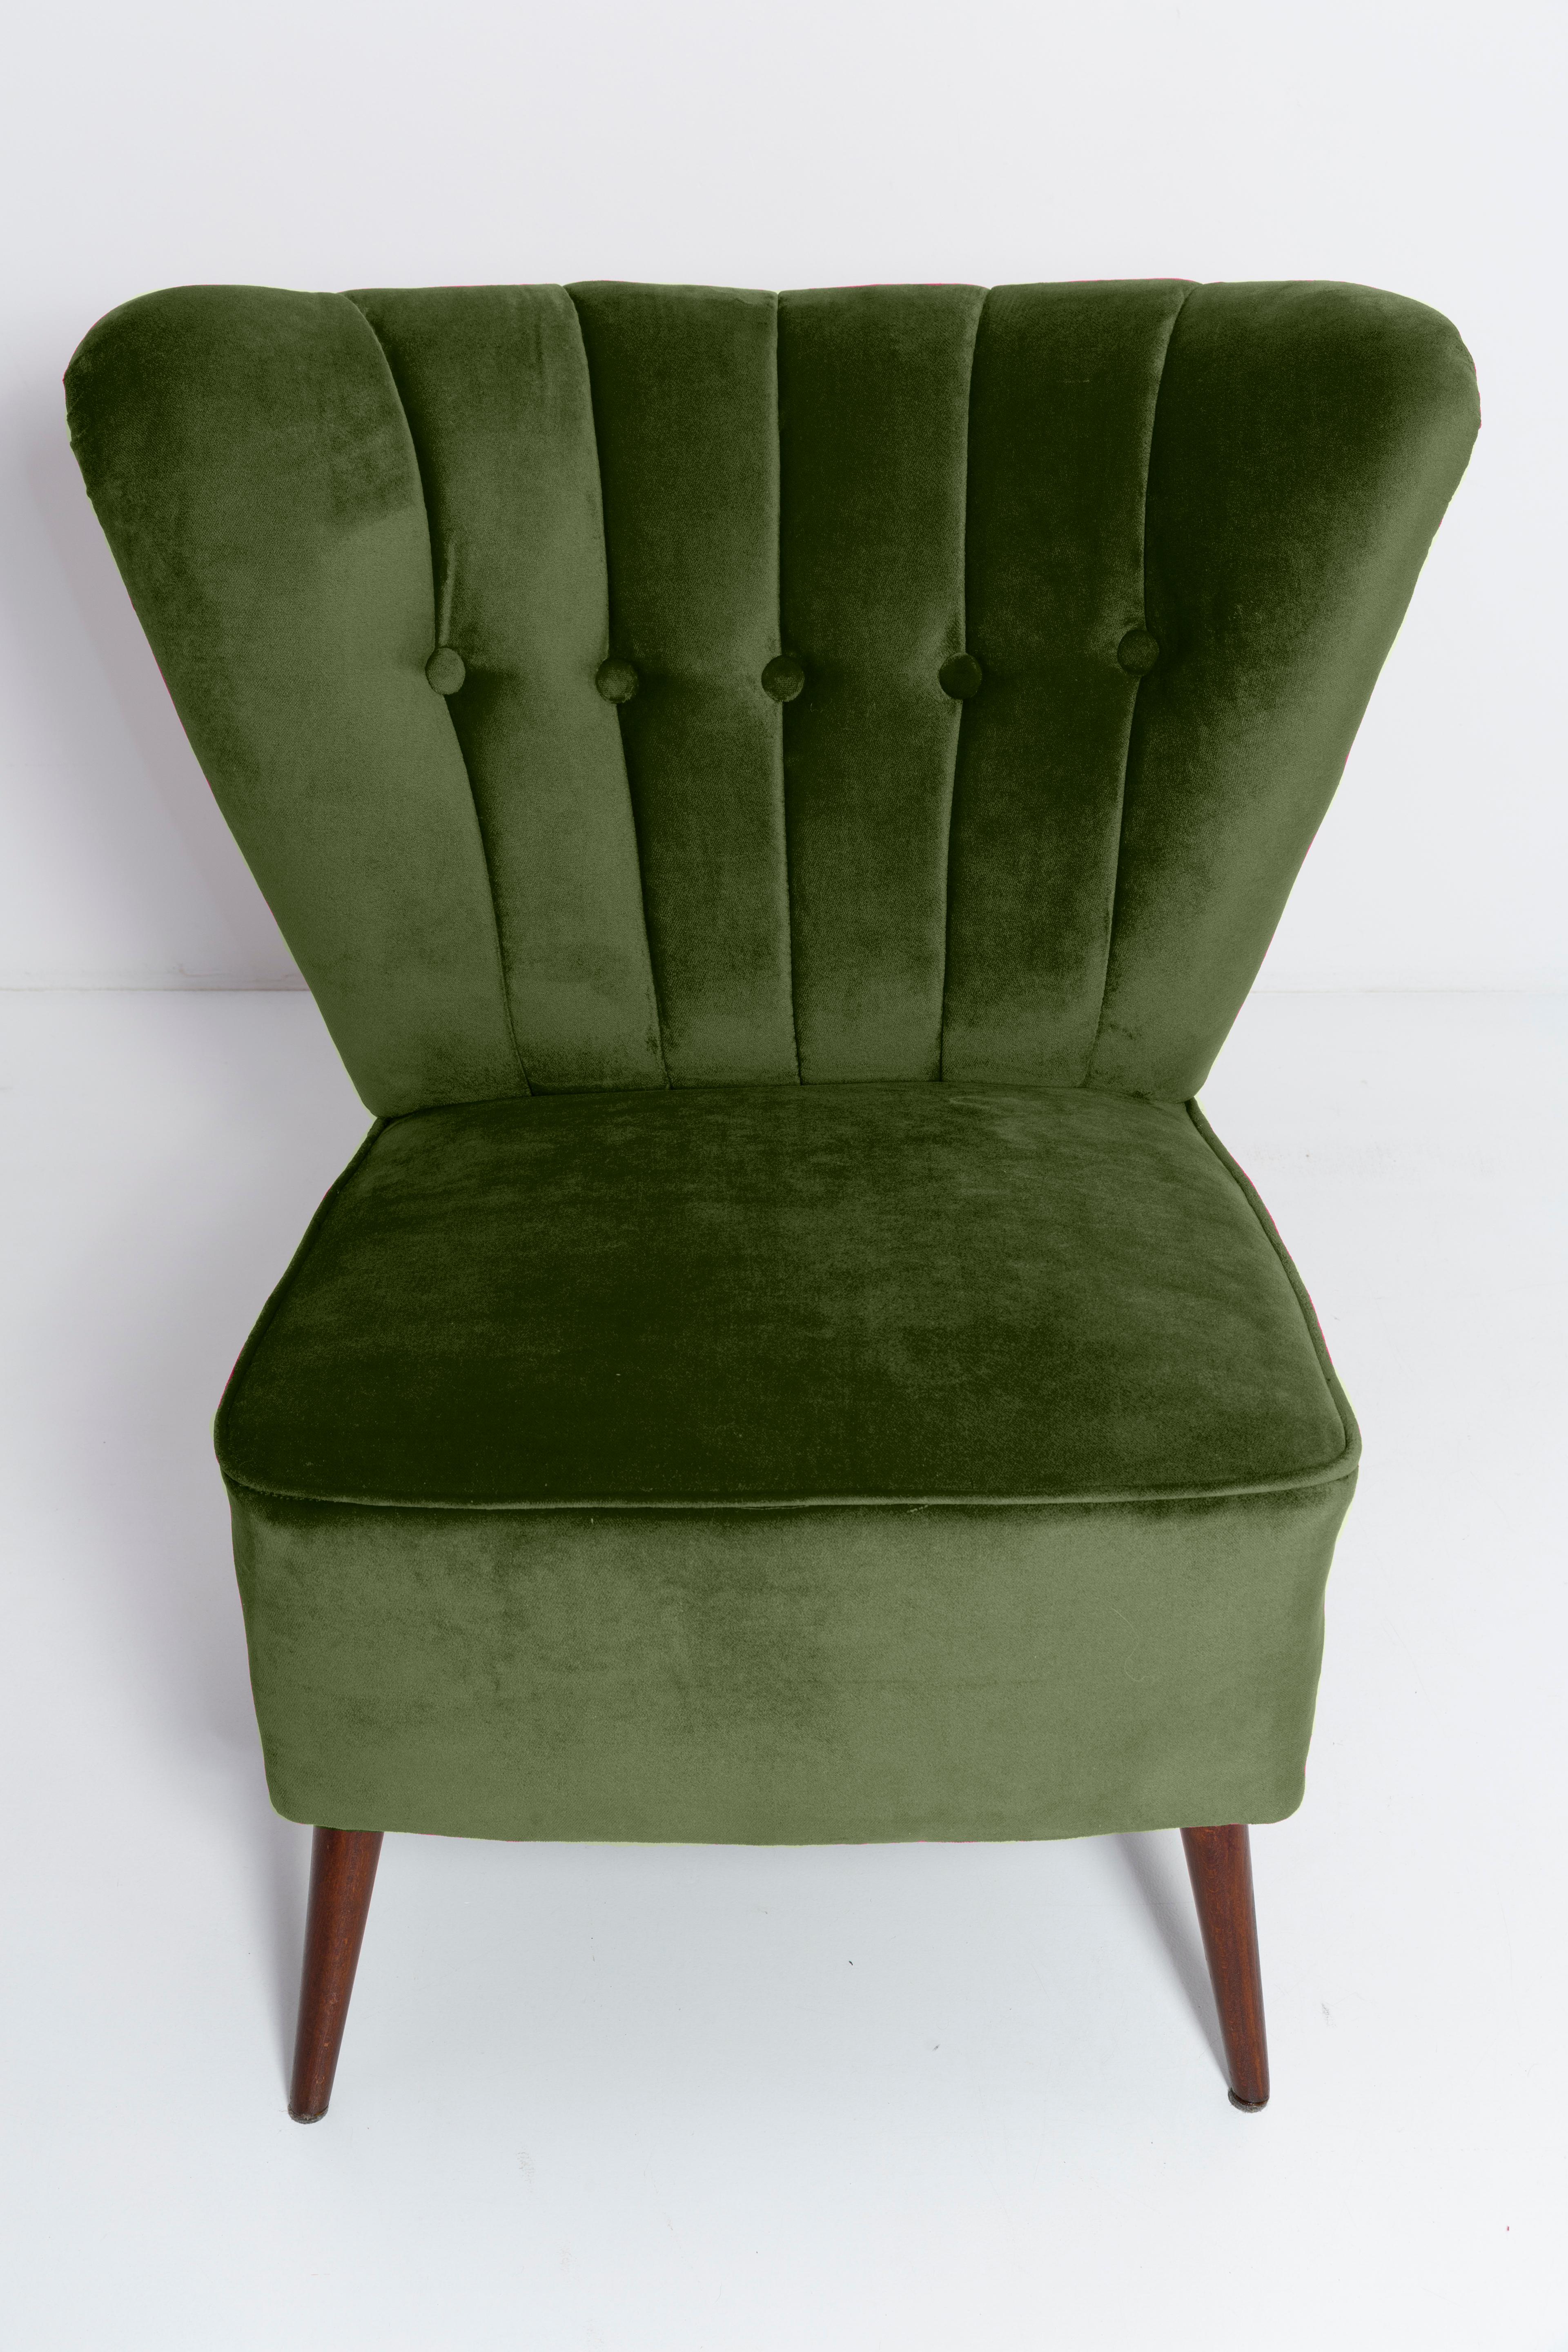 20th Century Midcentury Green Velvet Club Armchair, Europe, 1960s For Sale